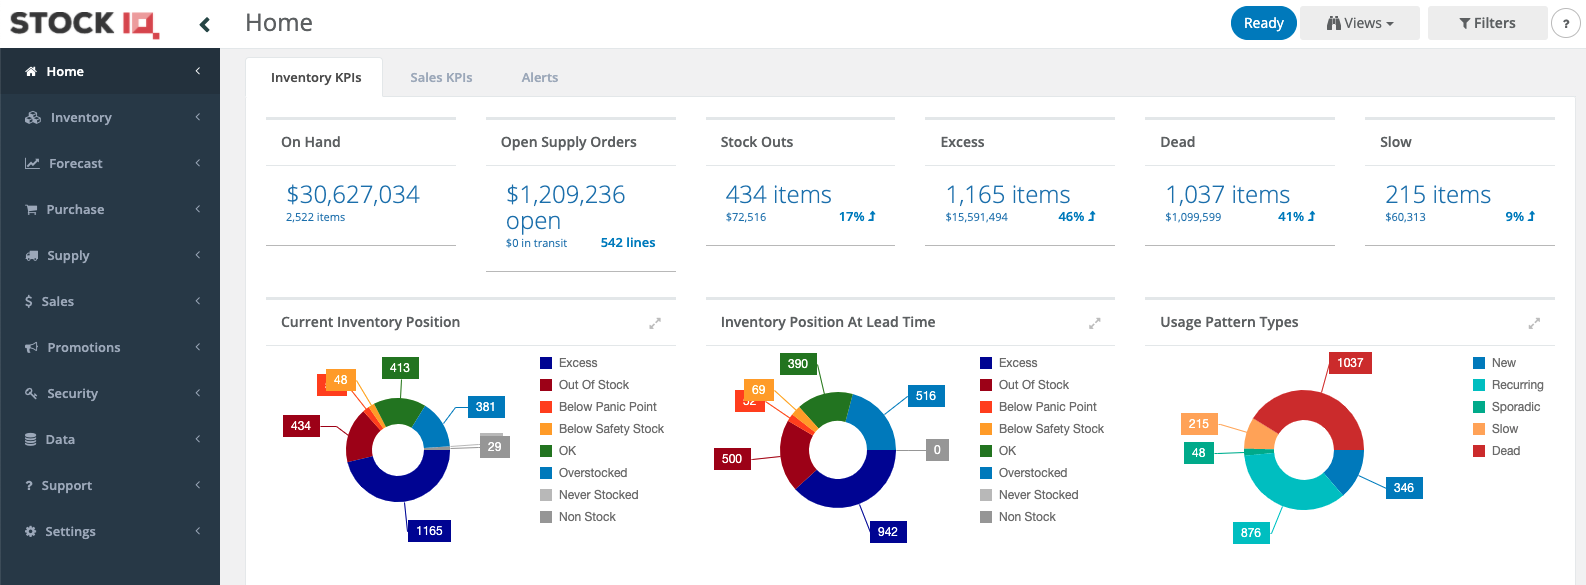 StockIQ Intelligent Supply Chain Planning Dashboard